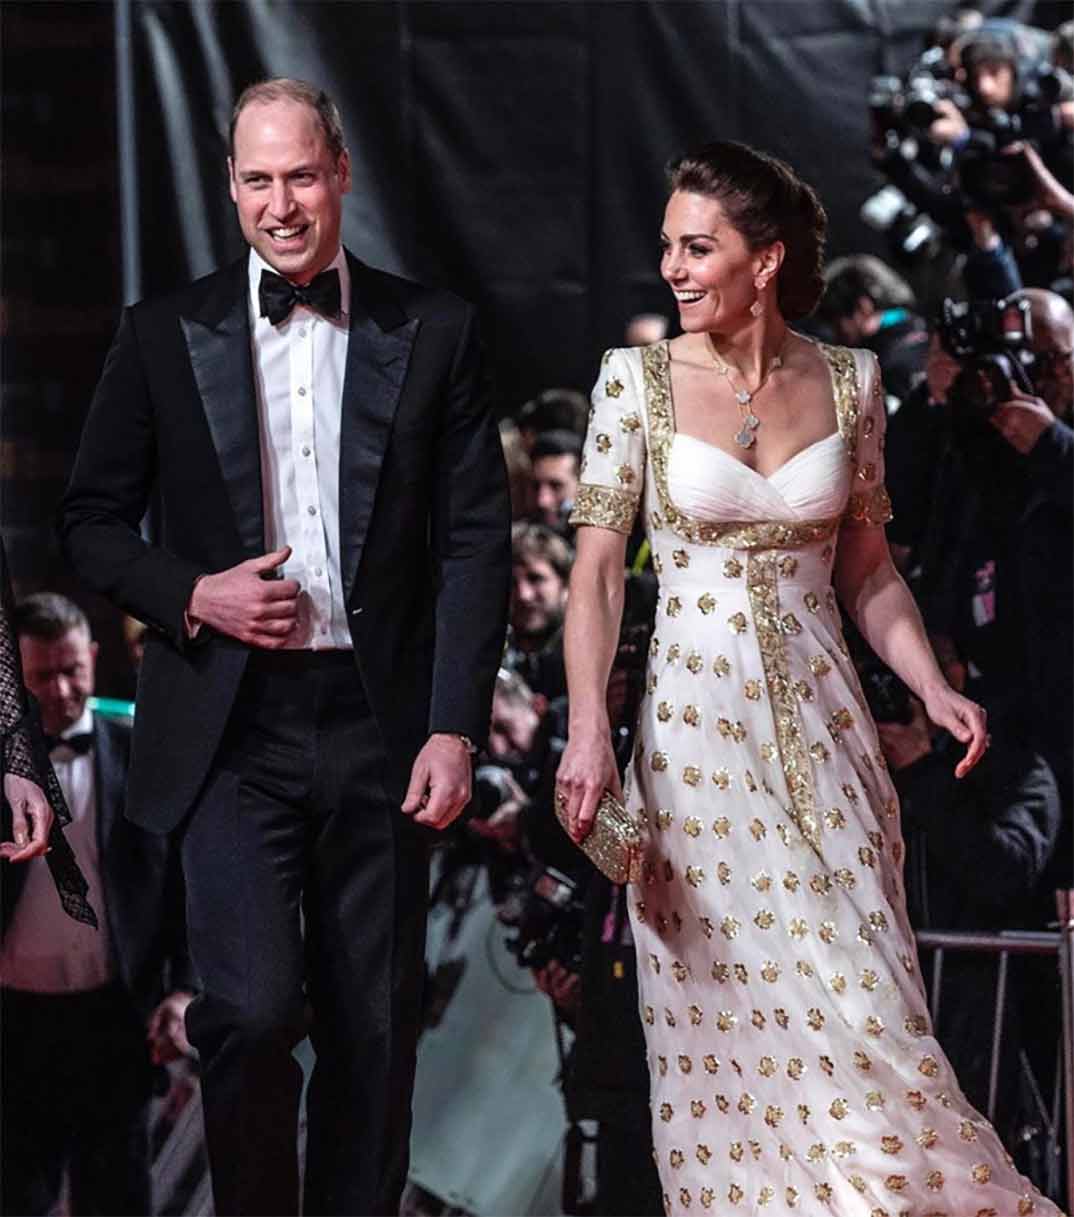 Duques de Cambridge - Premios Bafta 2020 © kesingtonroyal/Instagram